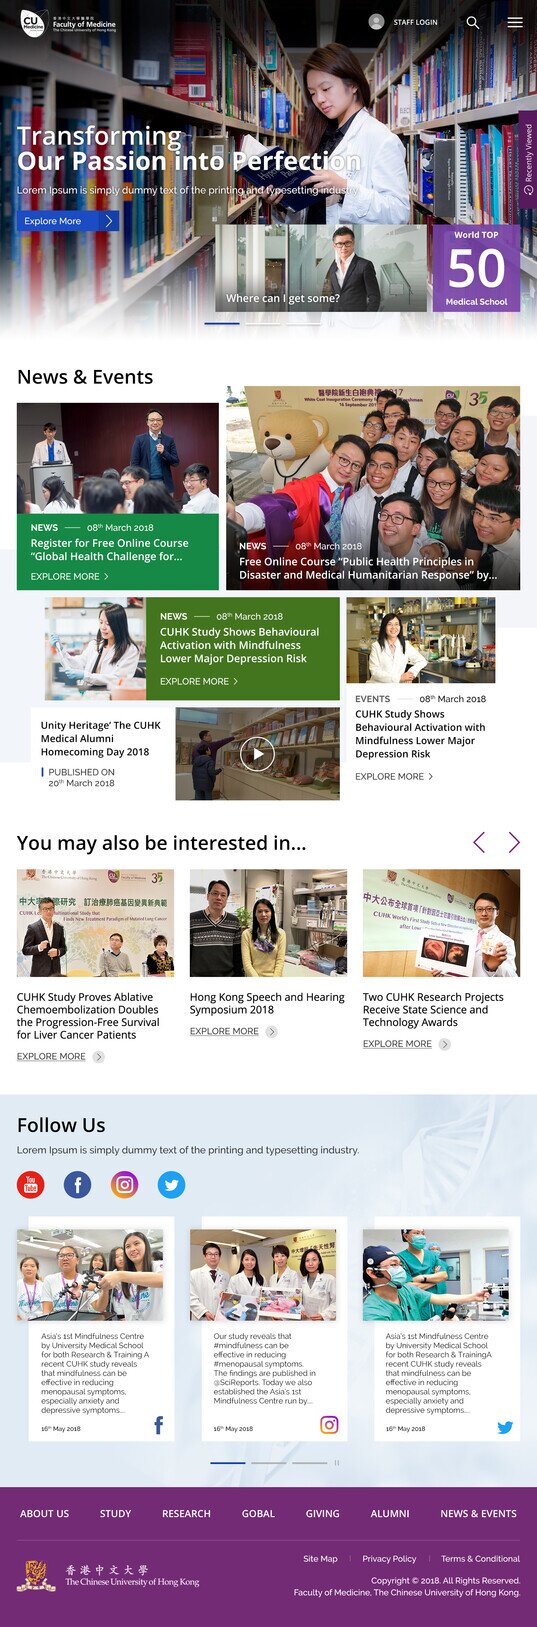 Chinese University of Hong Kong website screenshot for tablet version 1 of 4